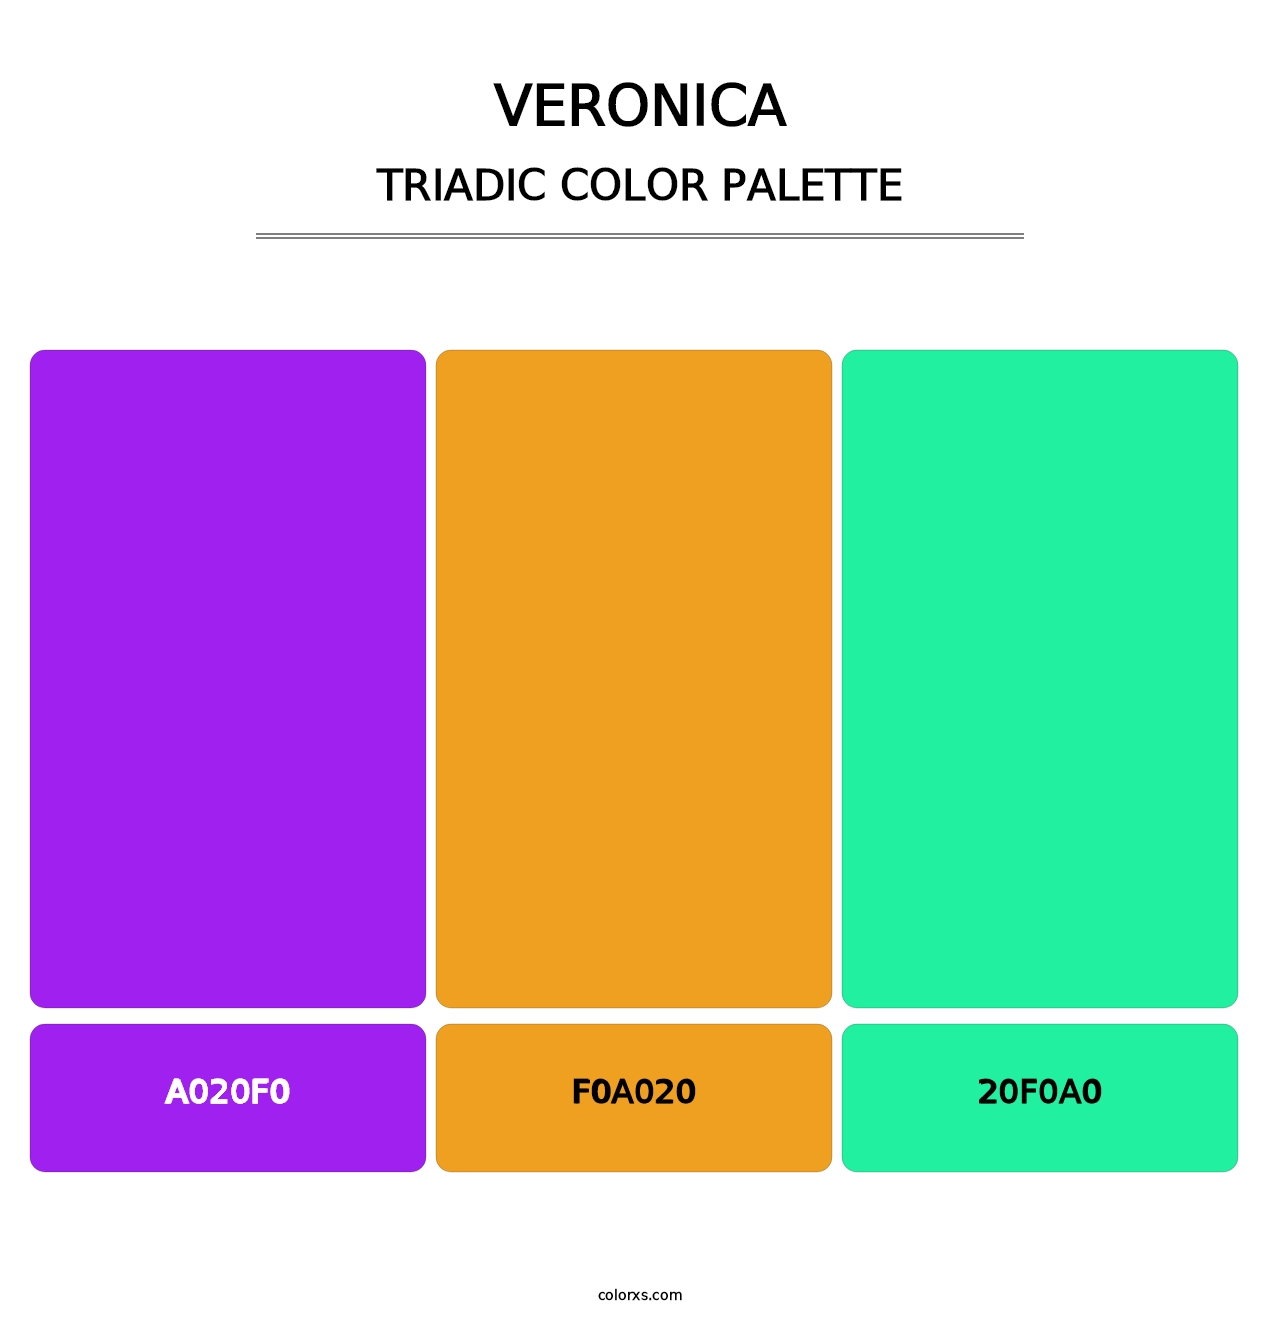 Veronica - Triadic Color Palette